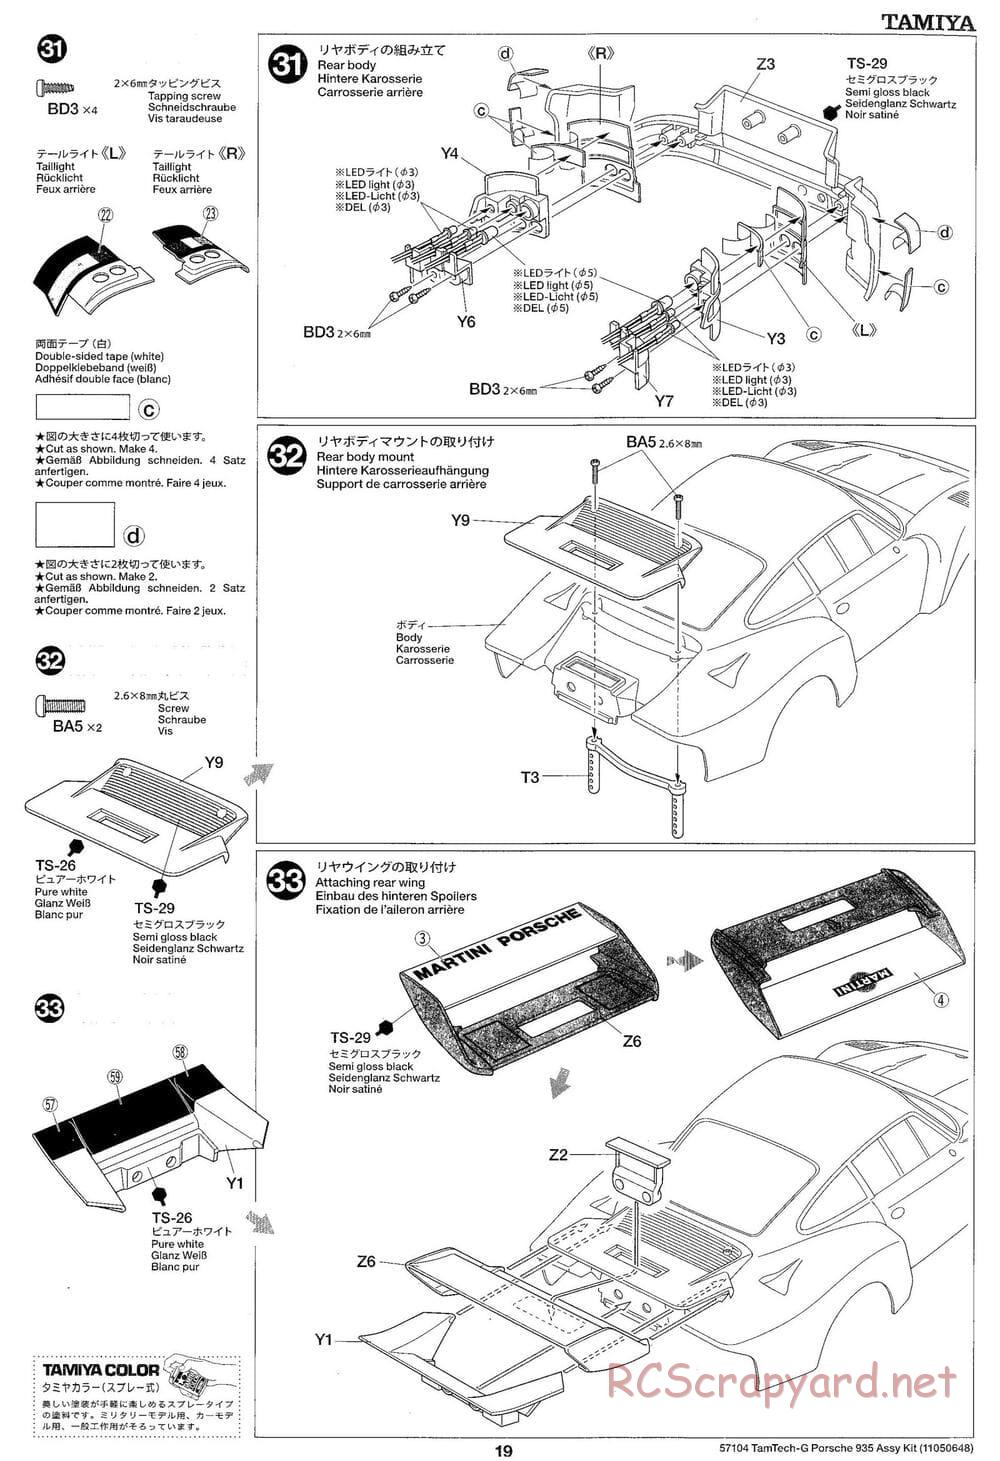 Tamiya - Porsche 935 Martini - GT-01 Chassis - Manual - Page 19